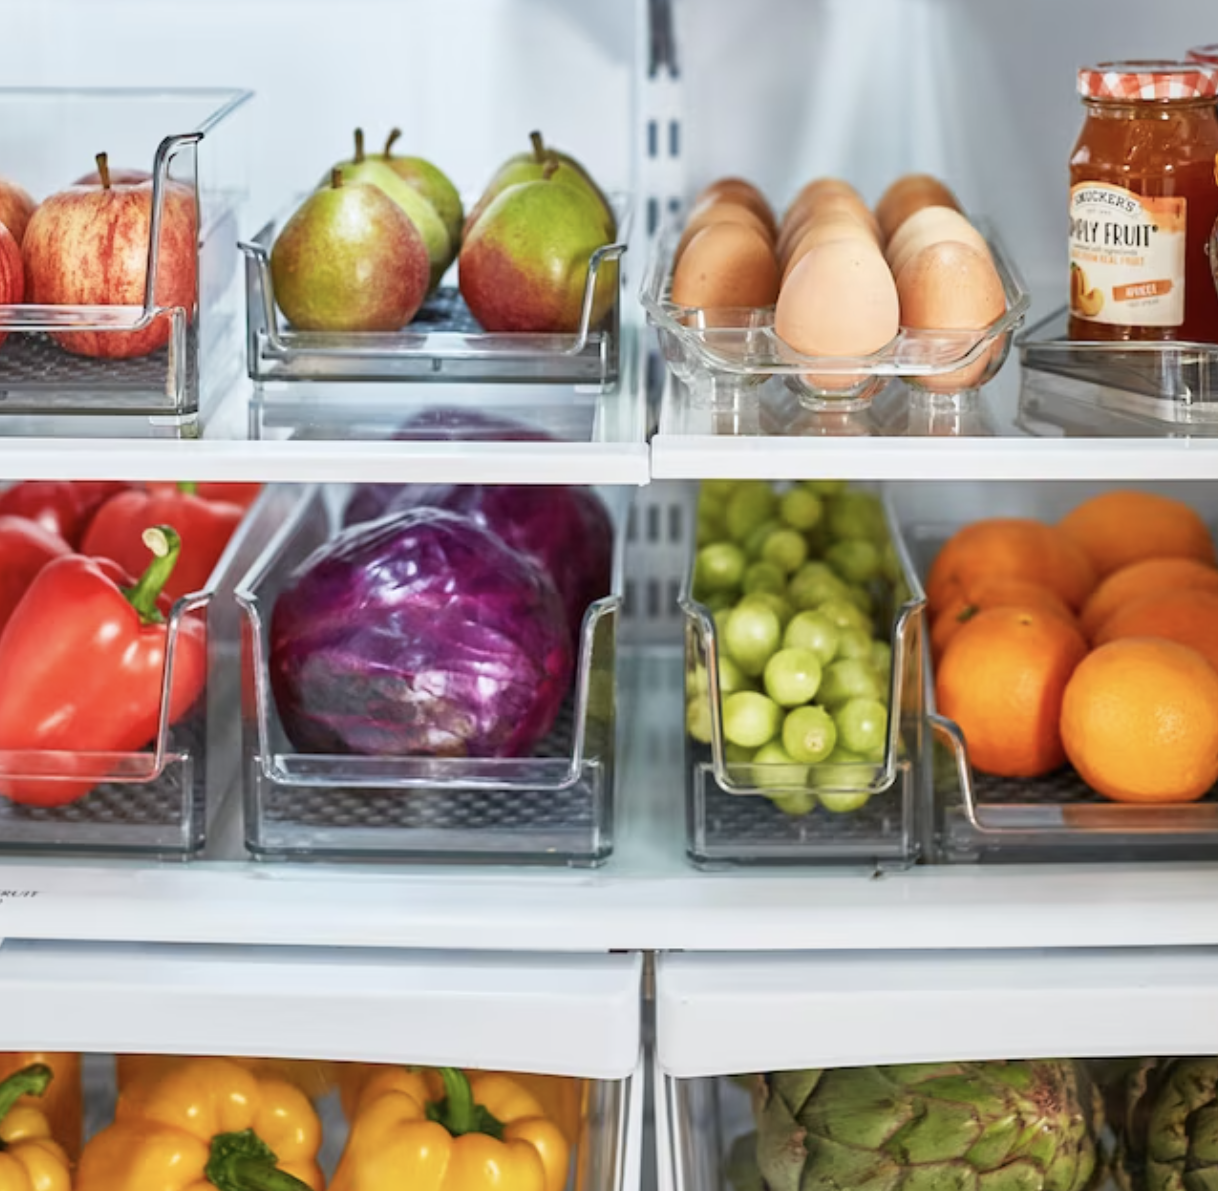 clear fridge bins with fruits and veggies on fridge shelves